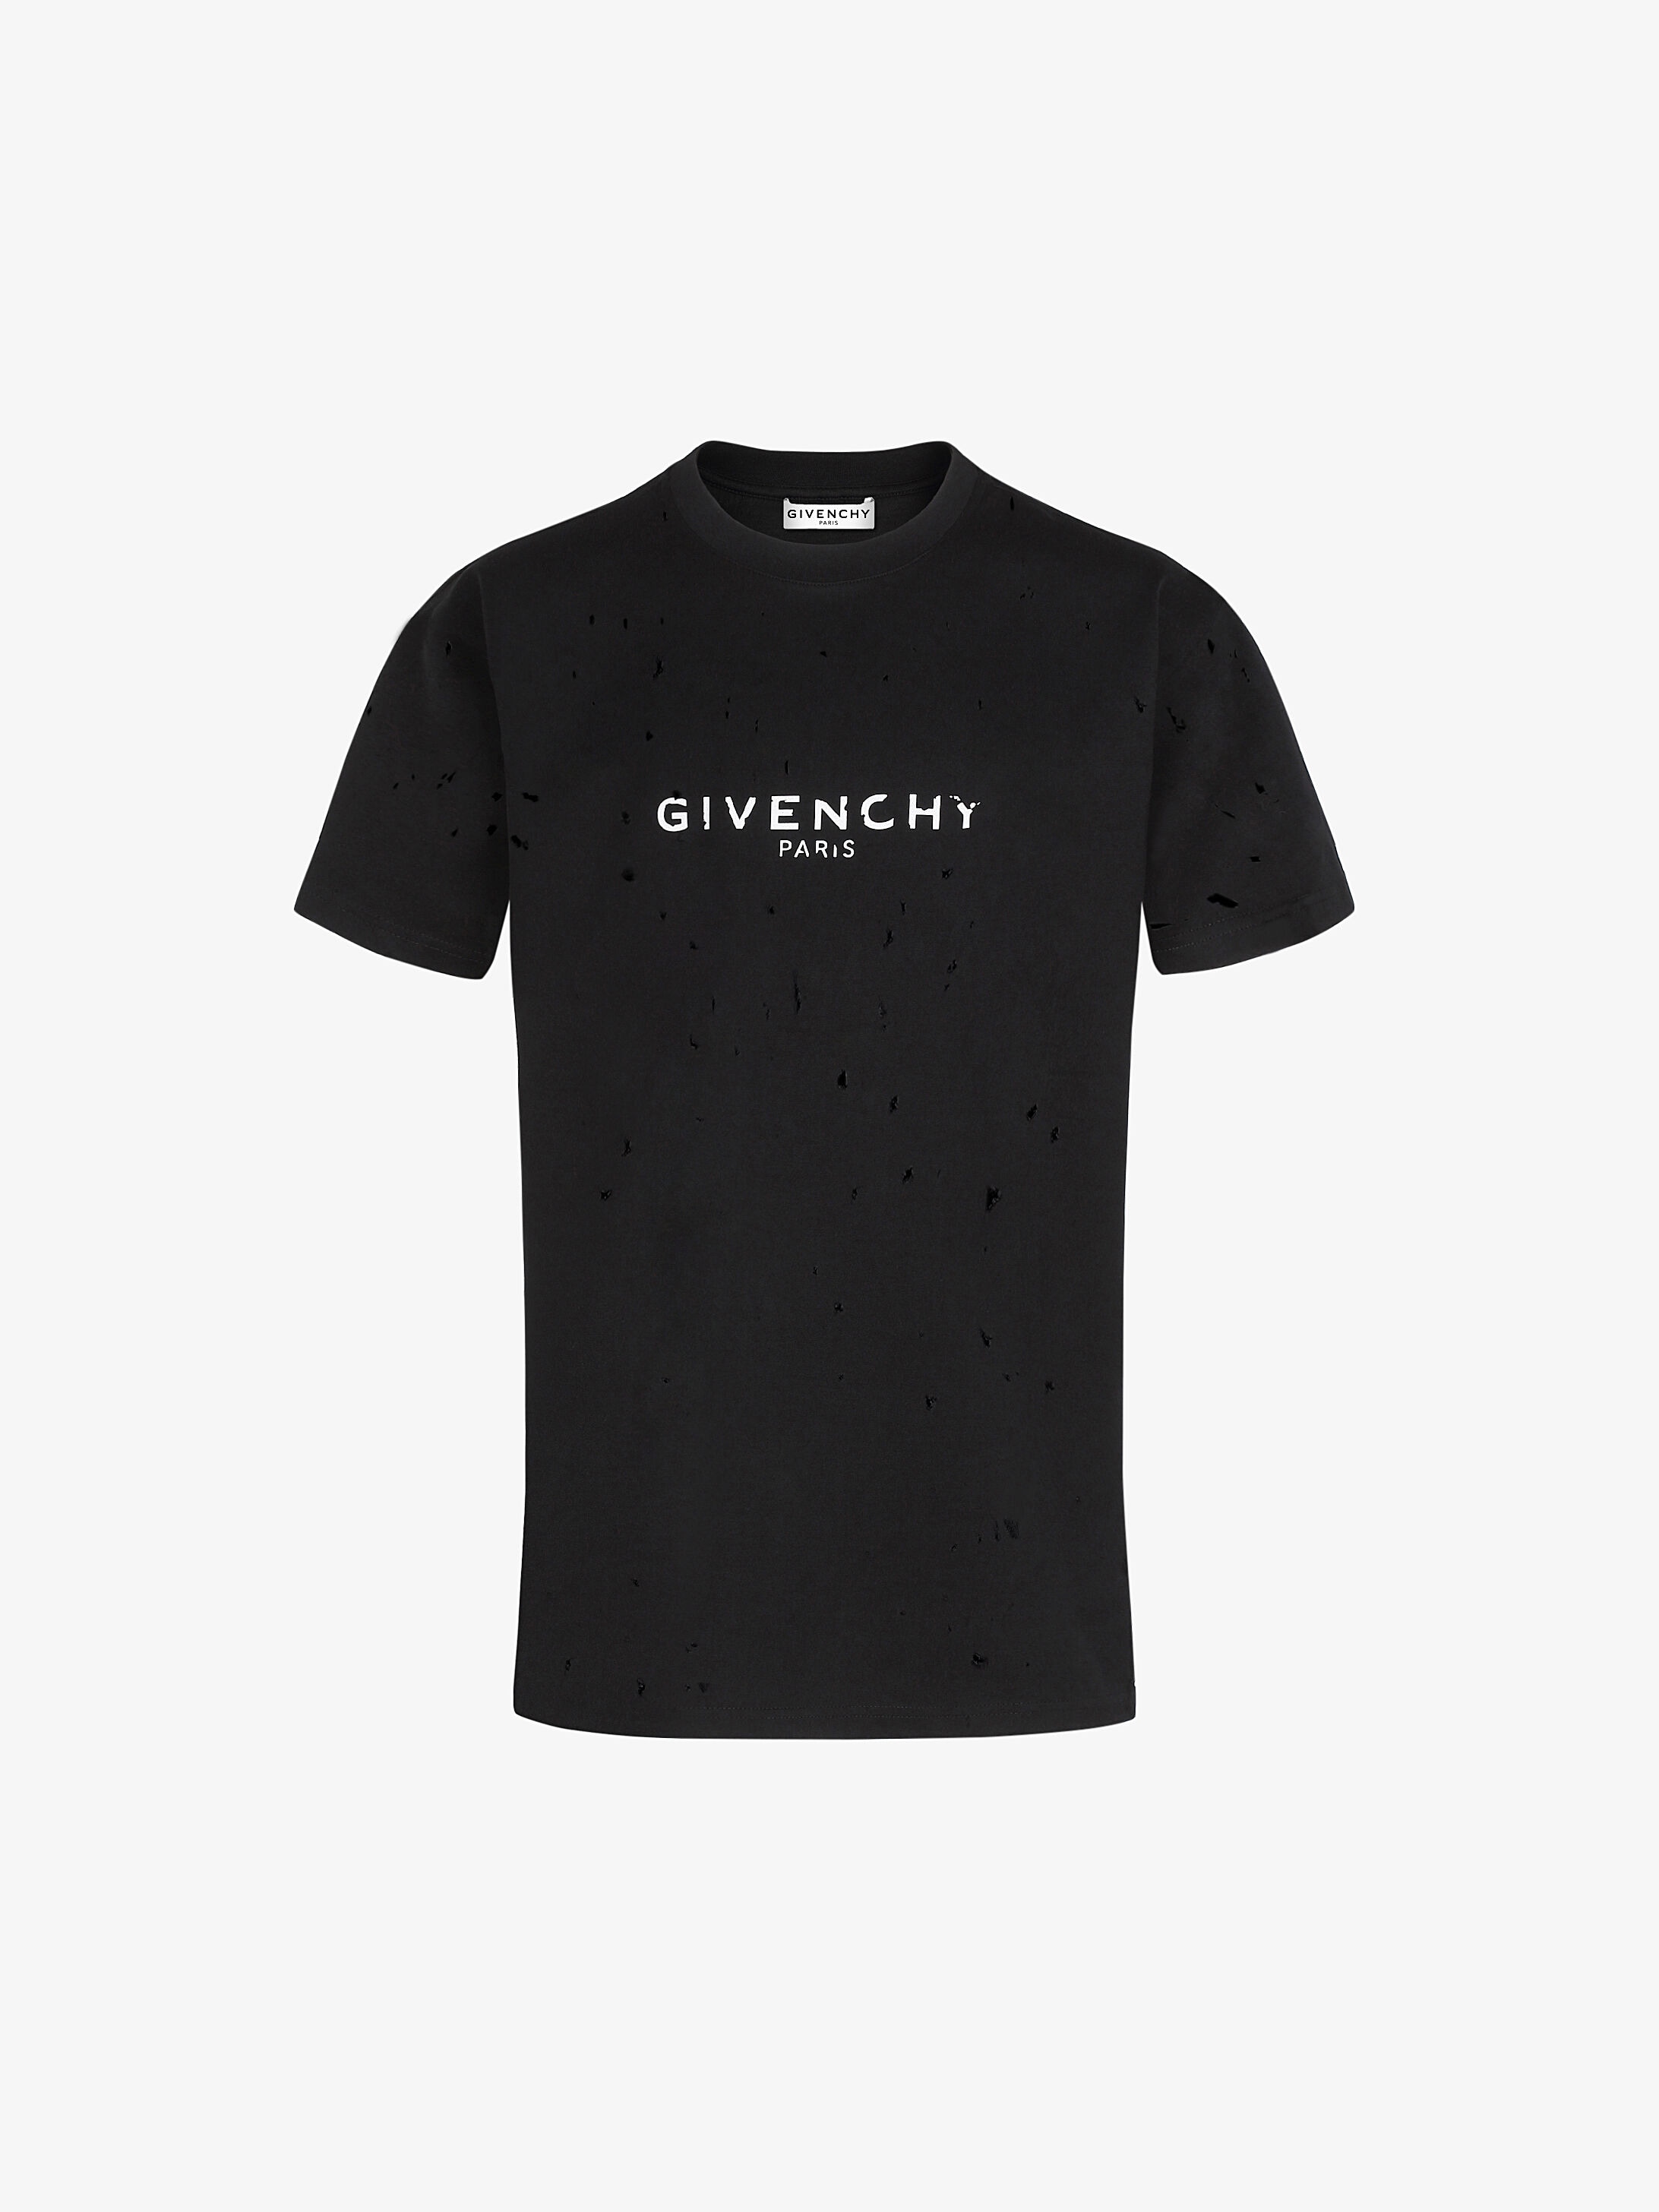 Givenchy PARIS destroyed t-shirt 